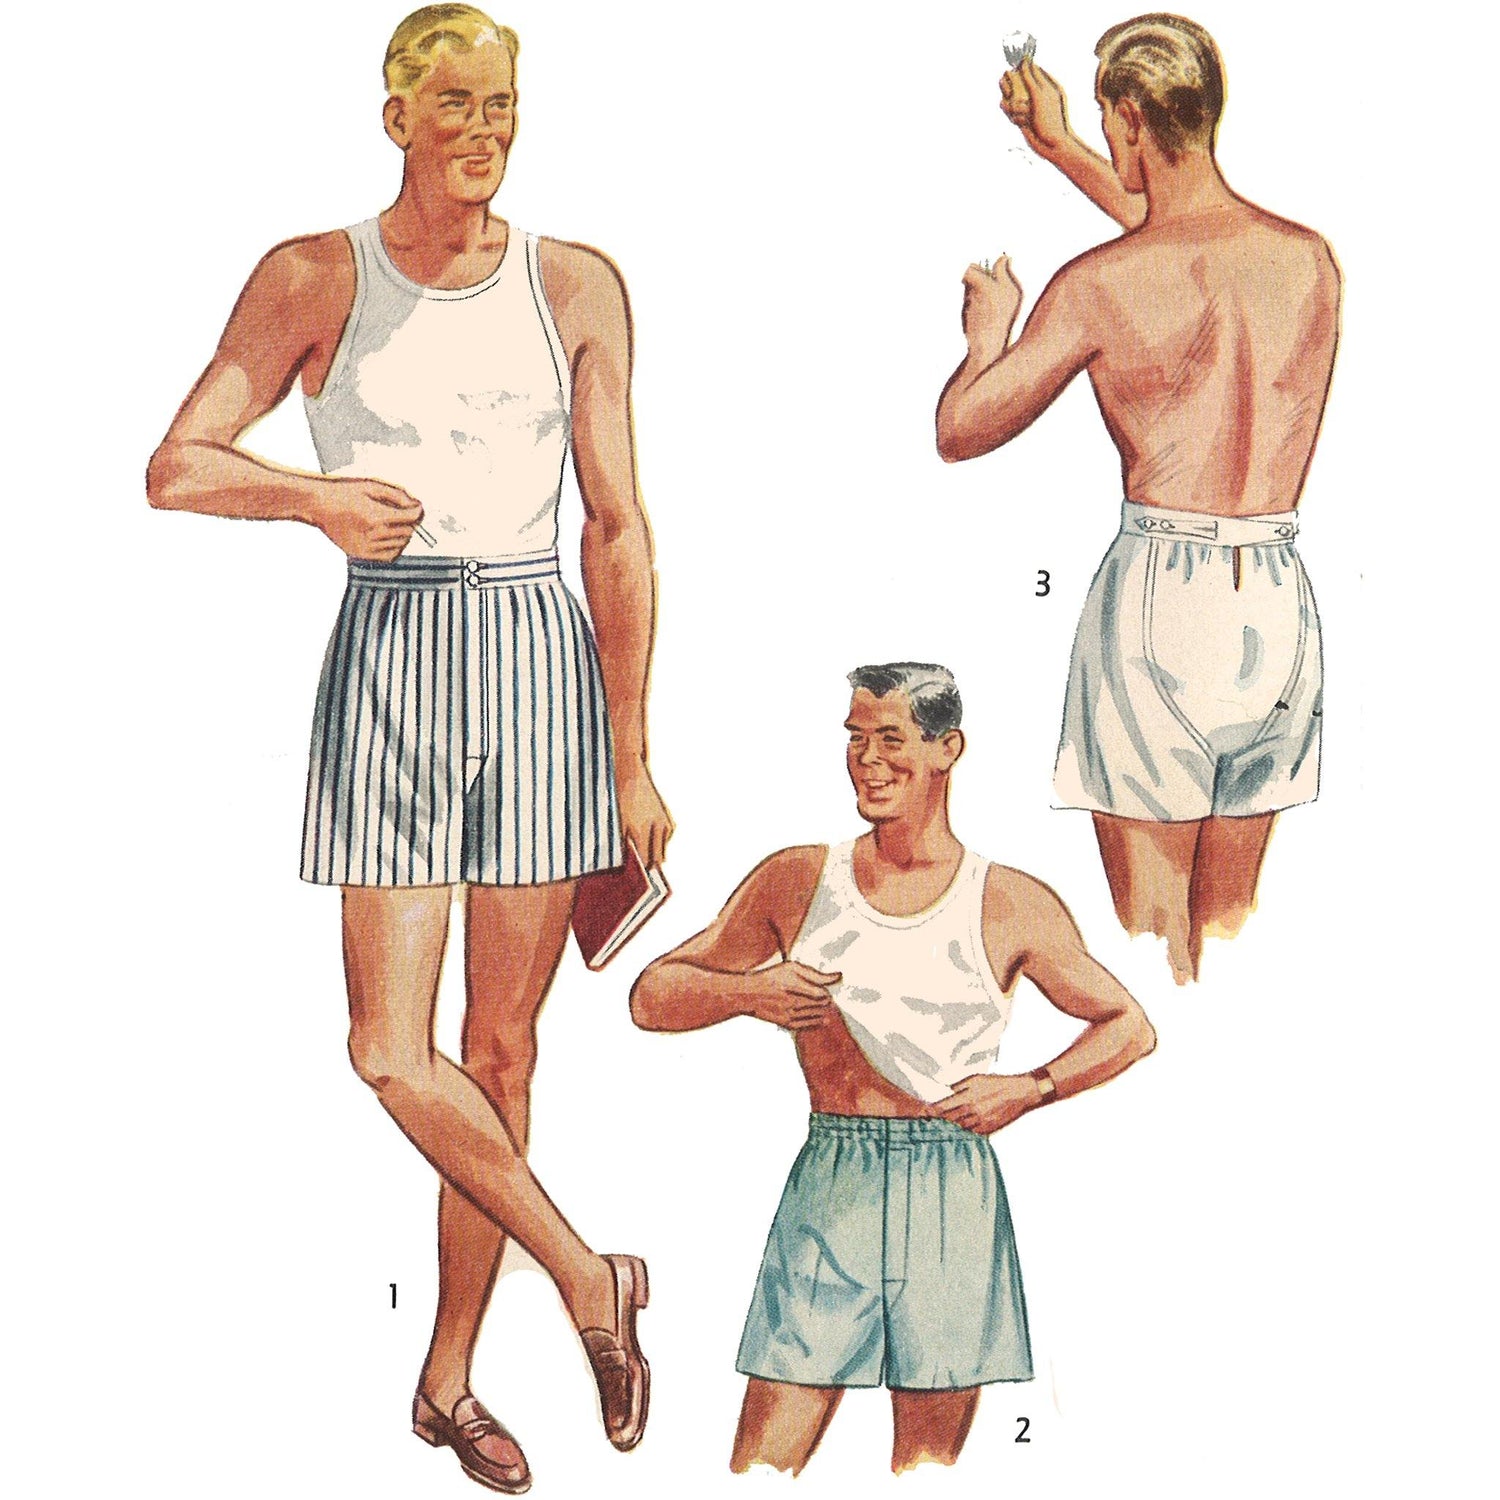 Plain Eazy Men Cotton Underwear, Type: Trunks at Rs 71/piece in